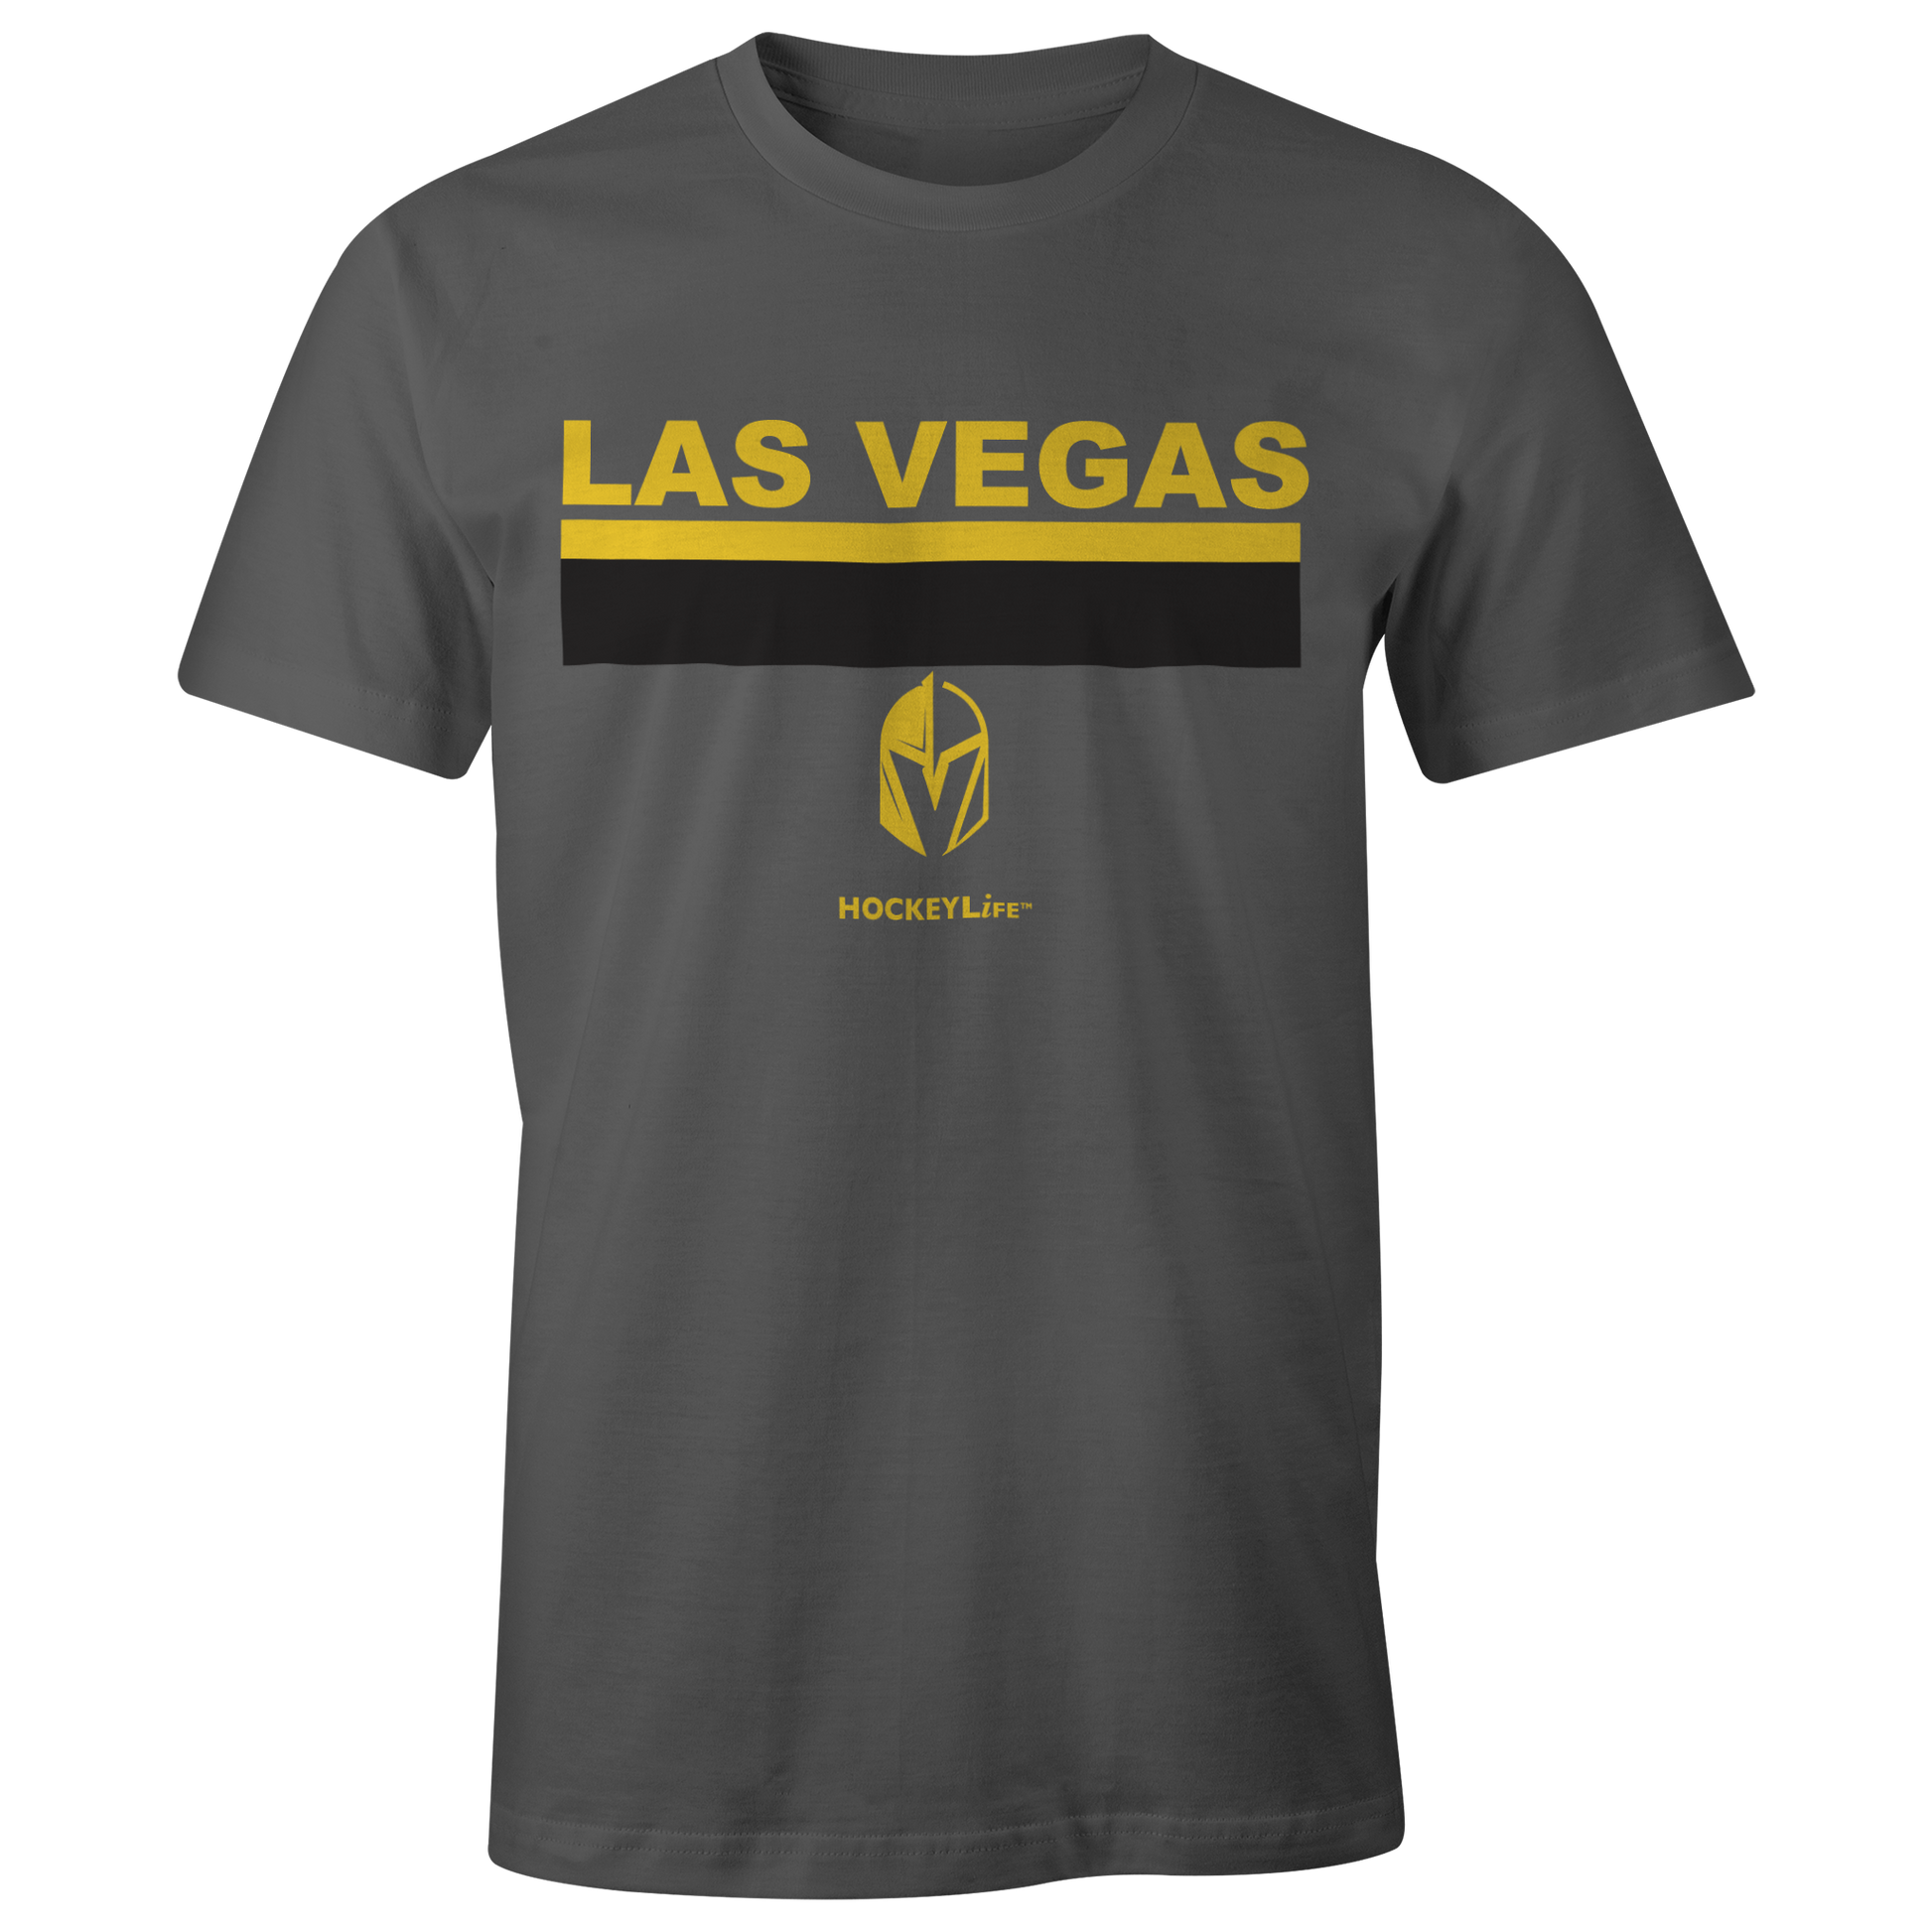 Cheap Vegas Golden Knights Apparel, Discount Knights Gear, NHL